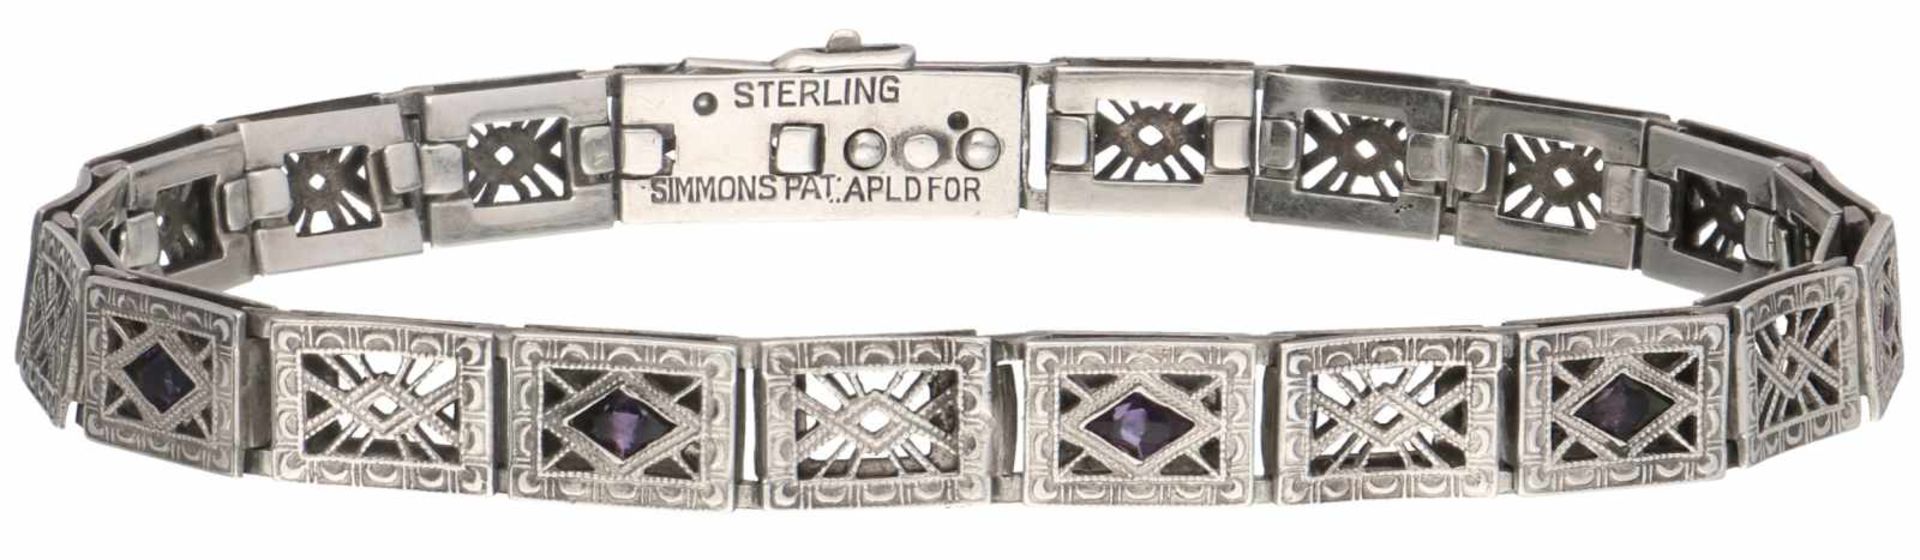 Zilveren filigrain armband, amethist - 925/1000.Keuren: Simmons Pat. Apld For, sterling. Met